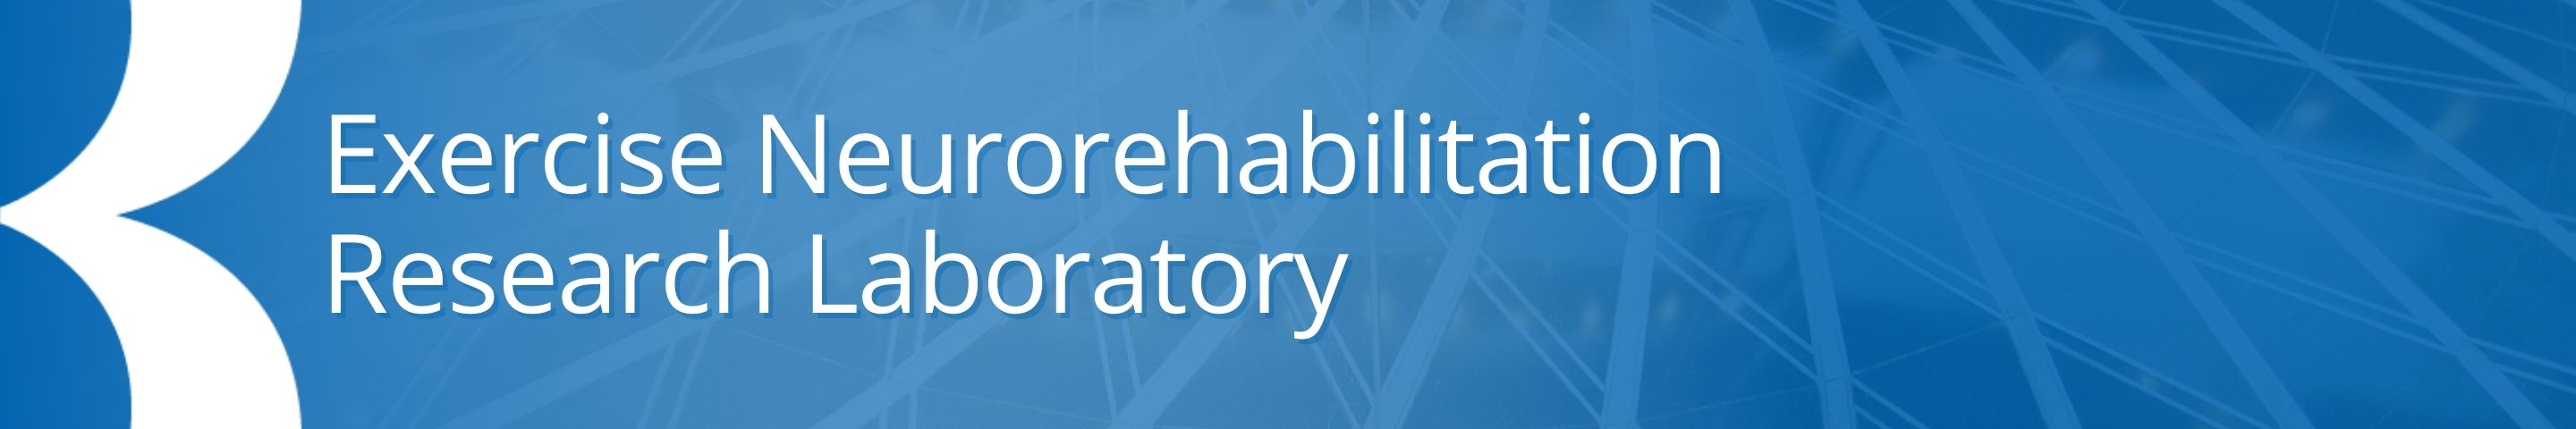 Blue banner Exercise Neurorehabilitation Research Laboratory